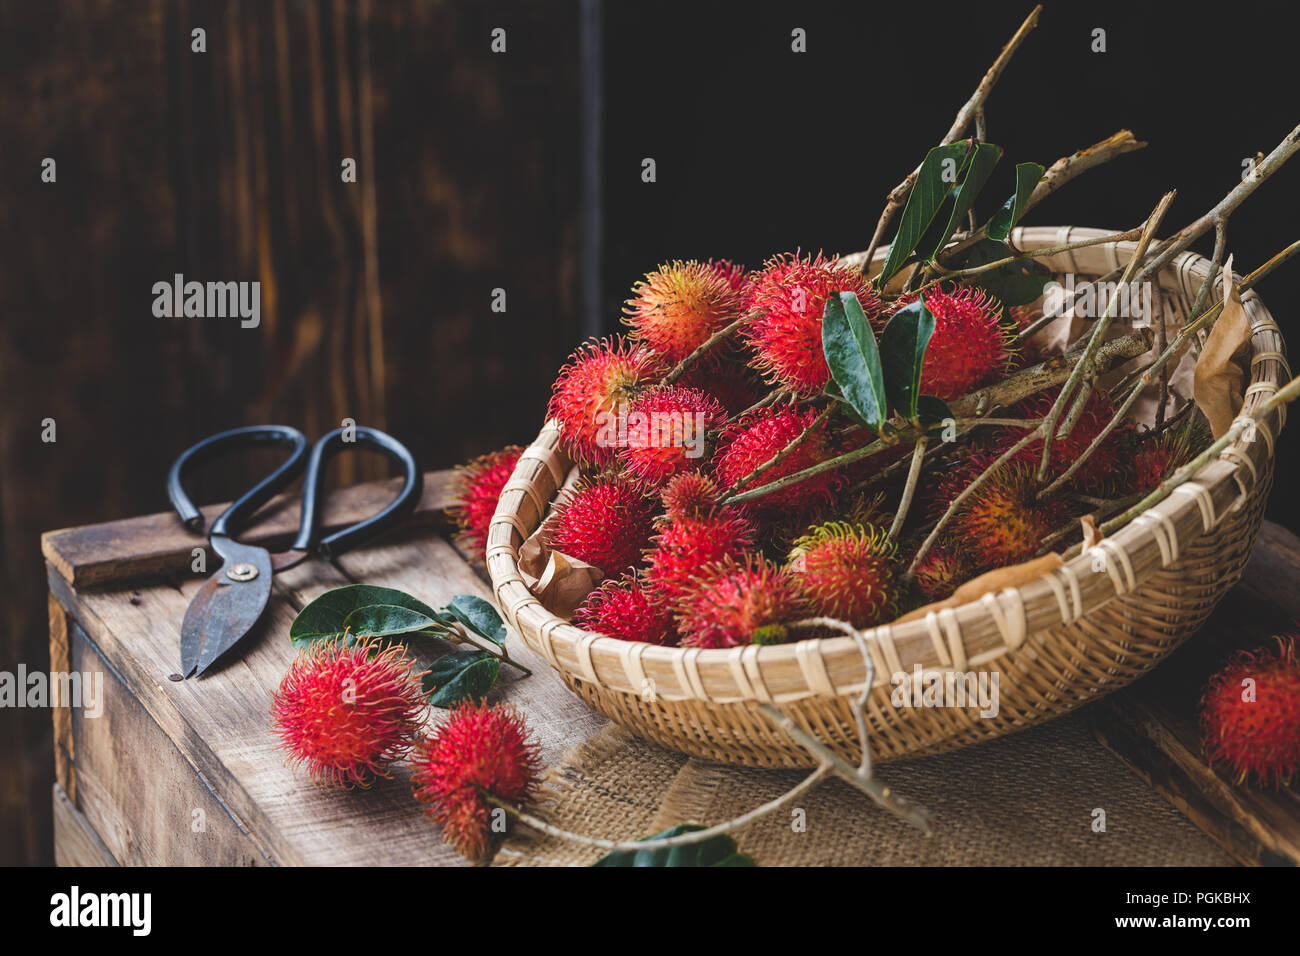 Fresh Fruits ramboutan Banque D'Images